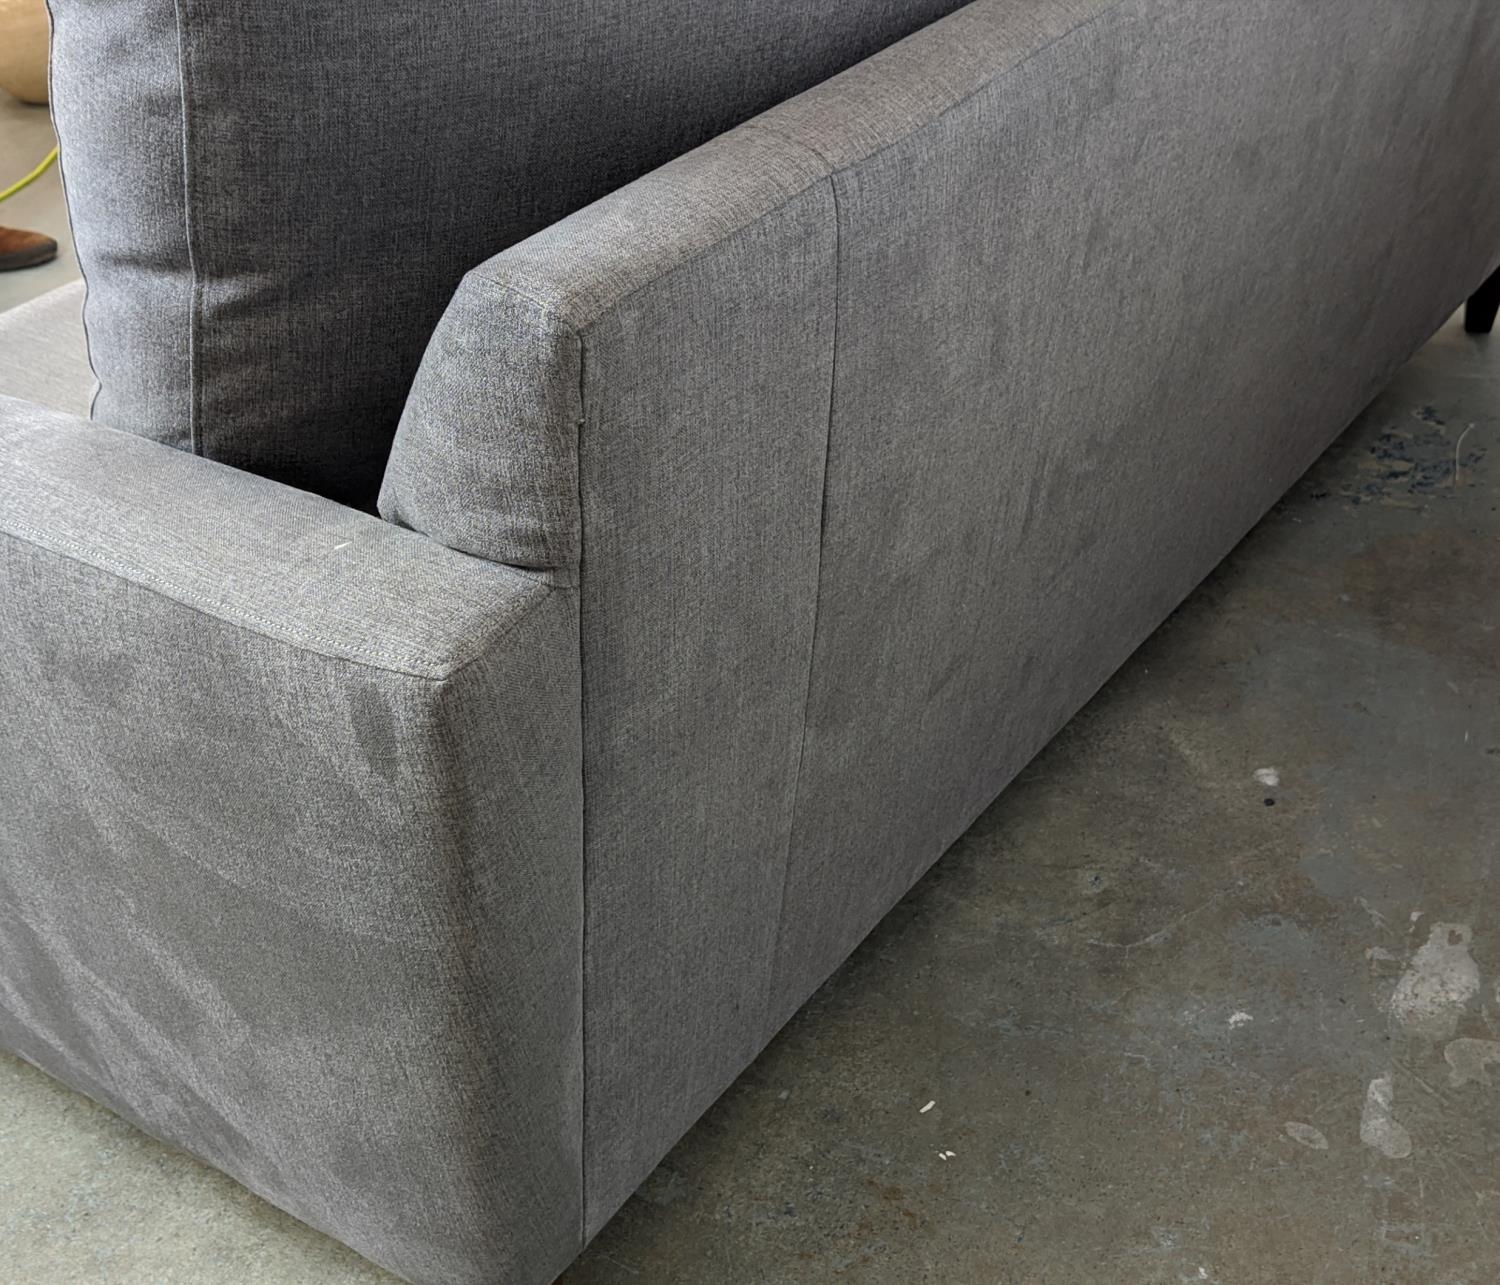 SOFA, grey upholstery, 78cm H x 188cm W. - Image 8 of 8